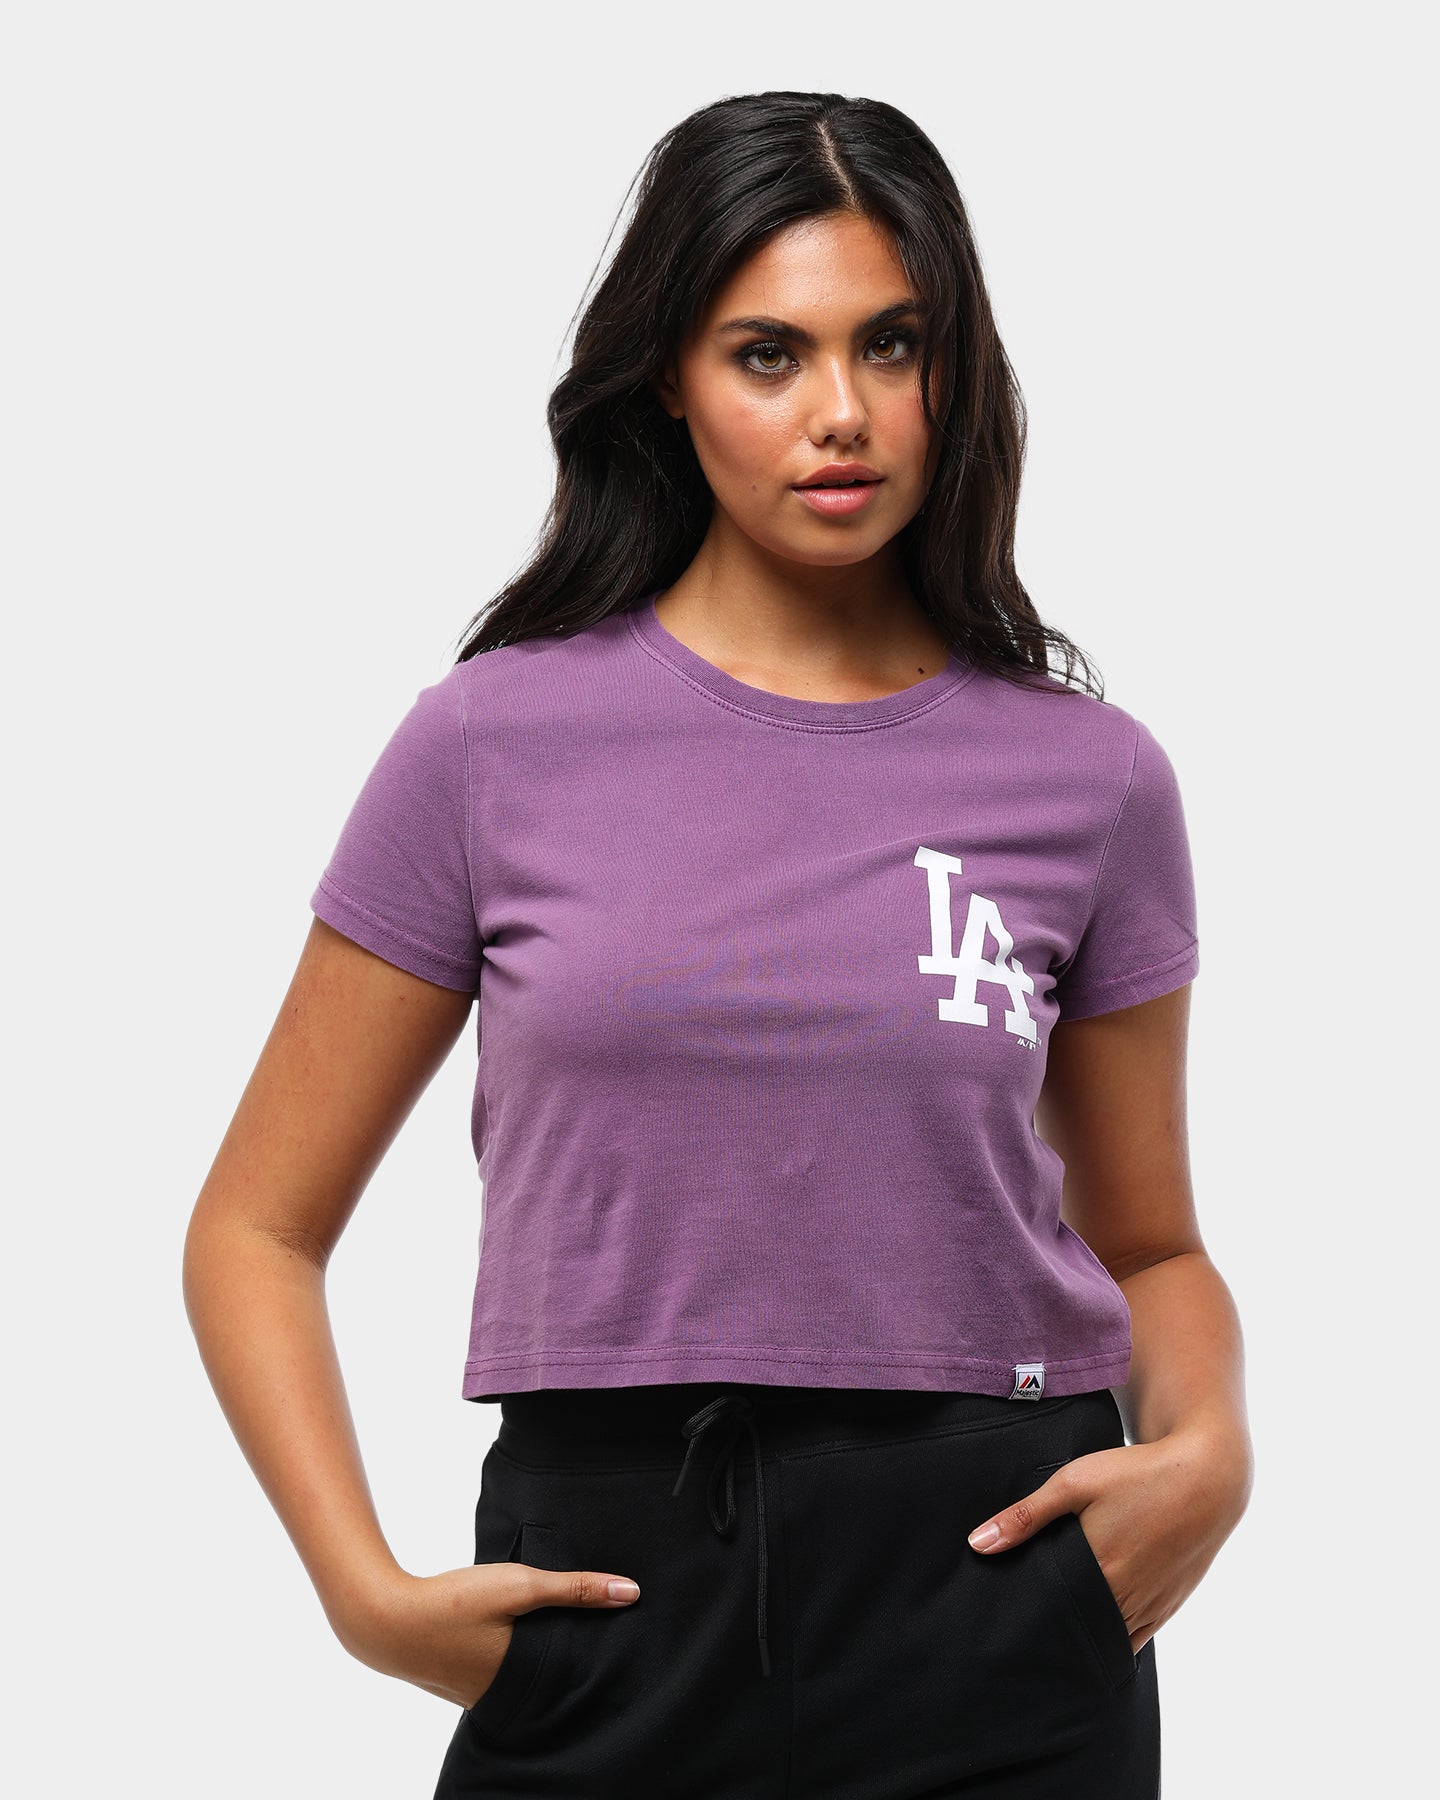 This Lakers 'Slap Stick' women's crop top jersey by @culturekings